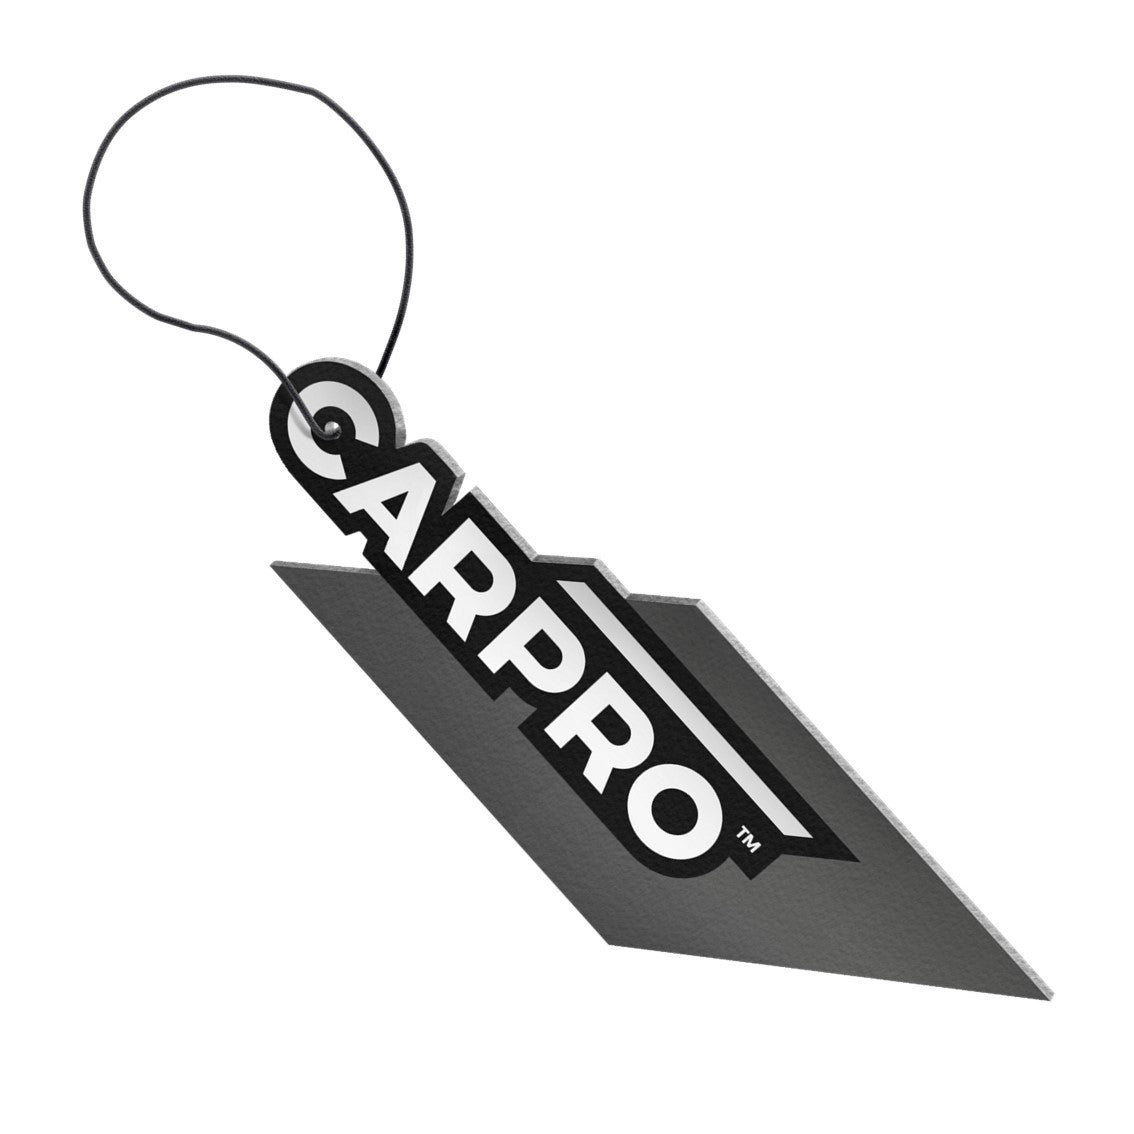 CARPRO Air freshner - Patchouli